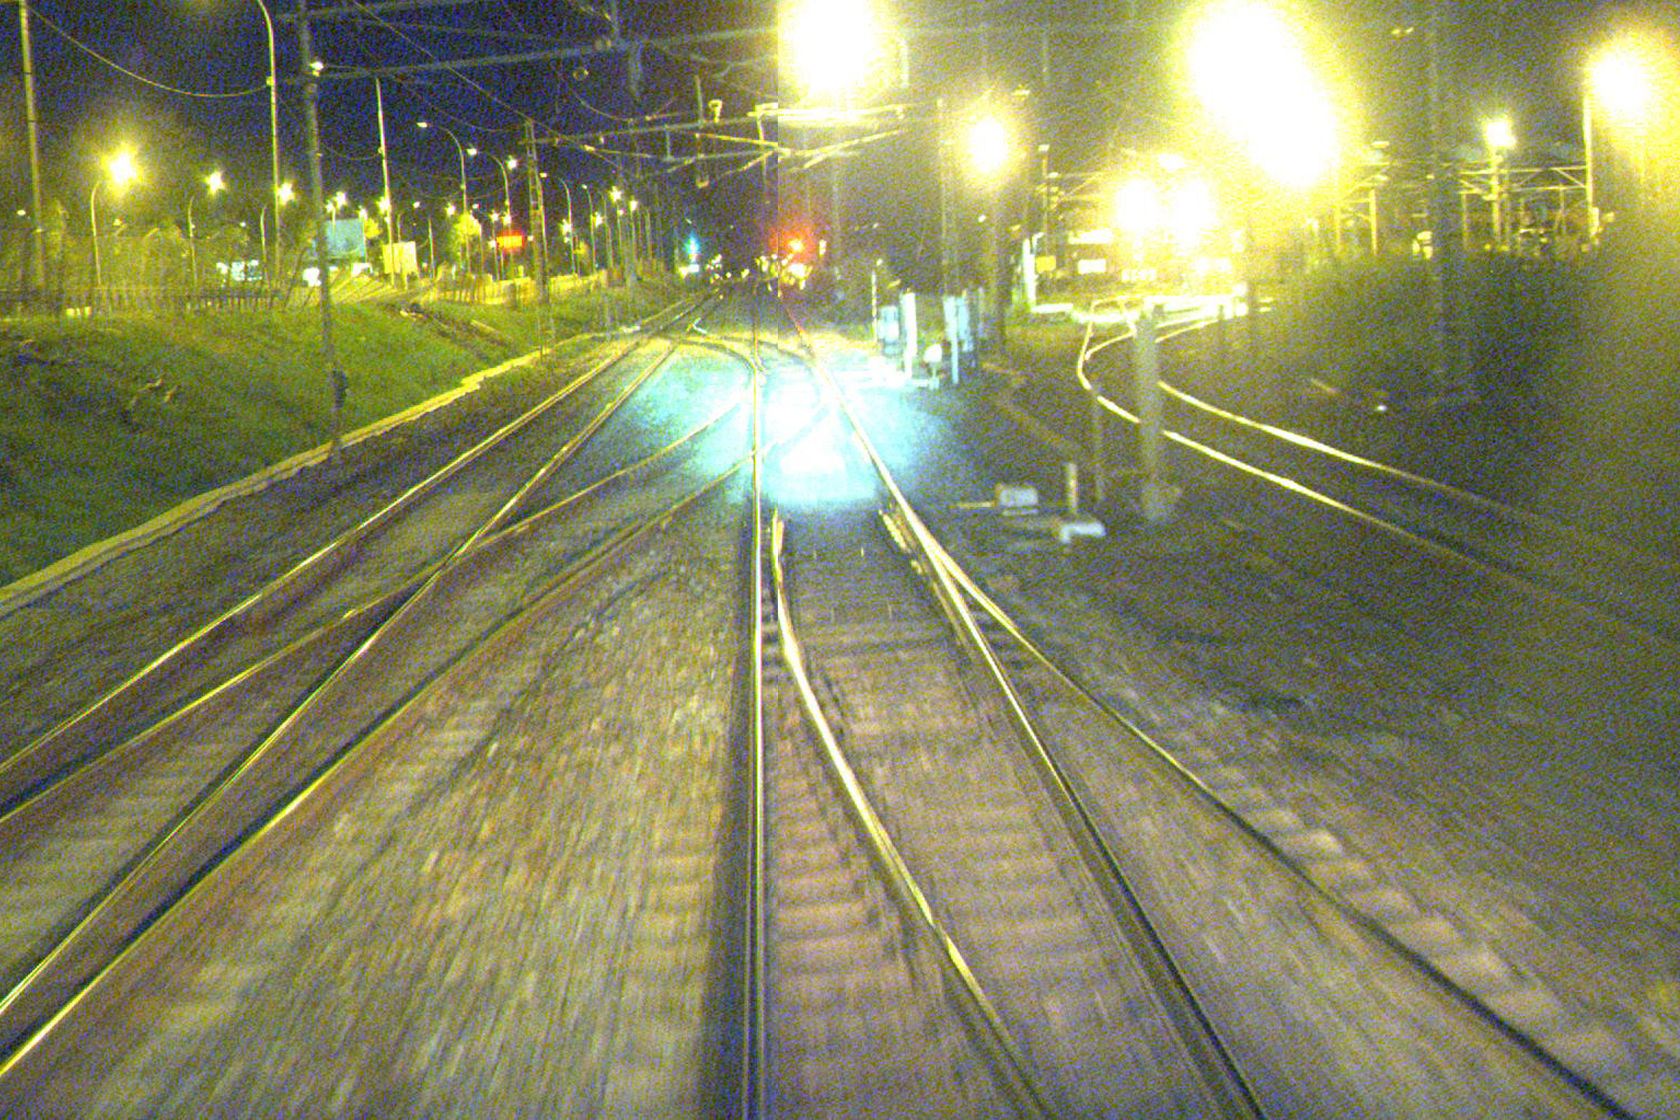 Tracks at Aker station